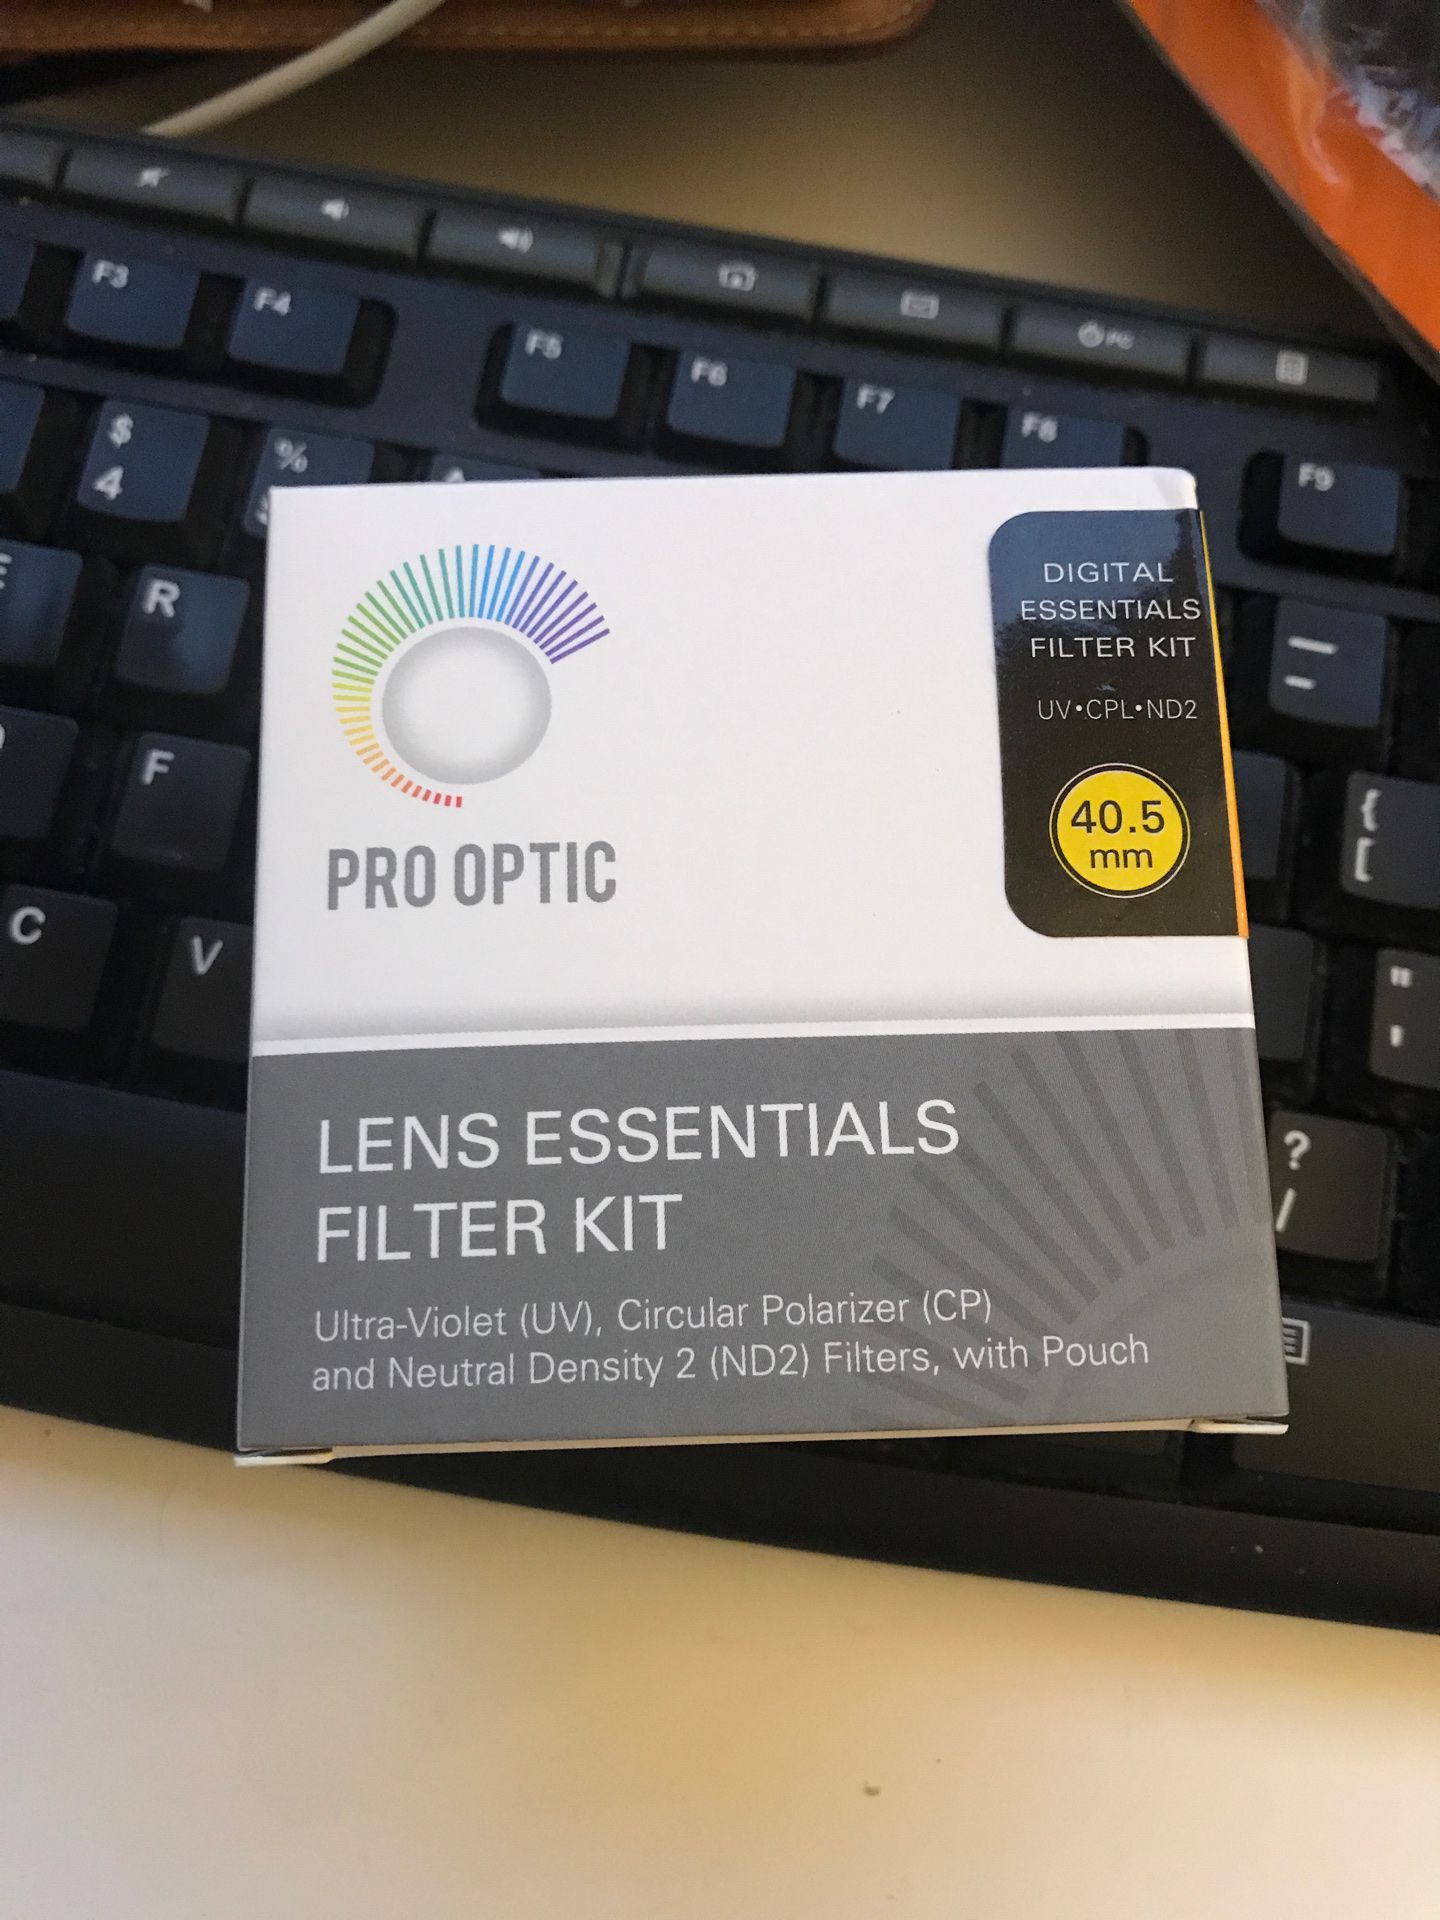 Pro optic lens essentials filter kit